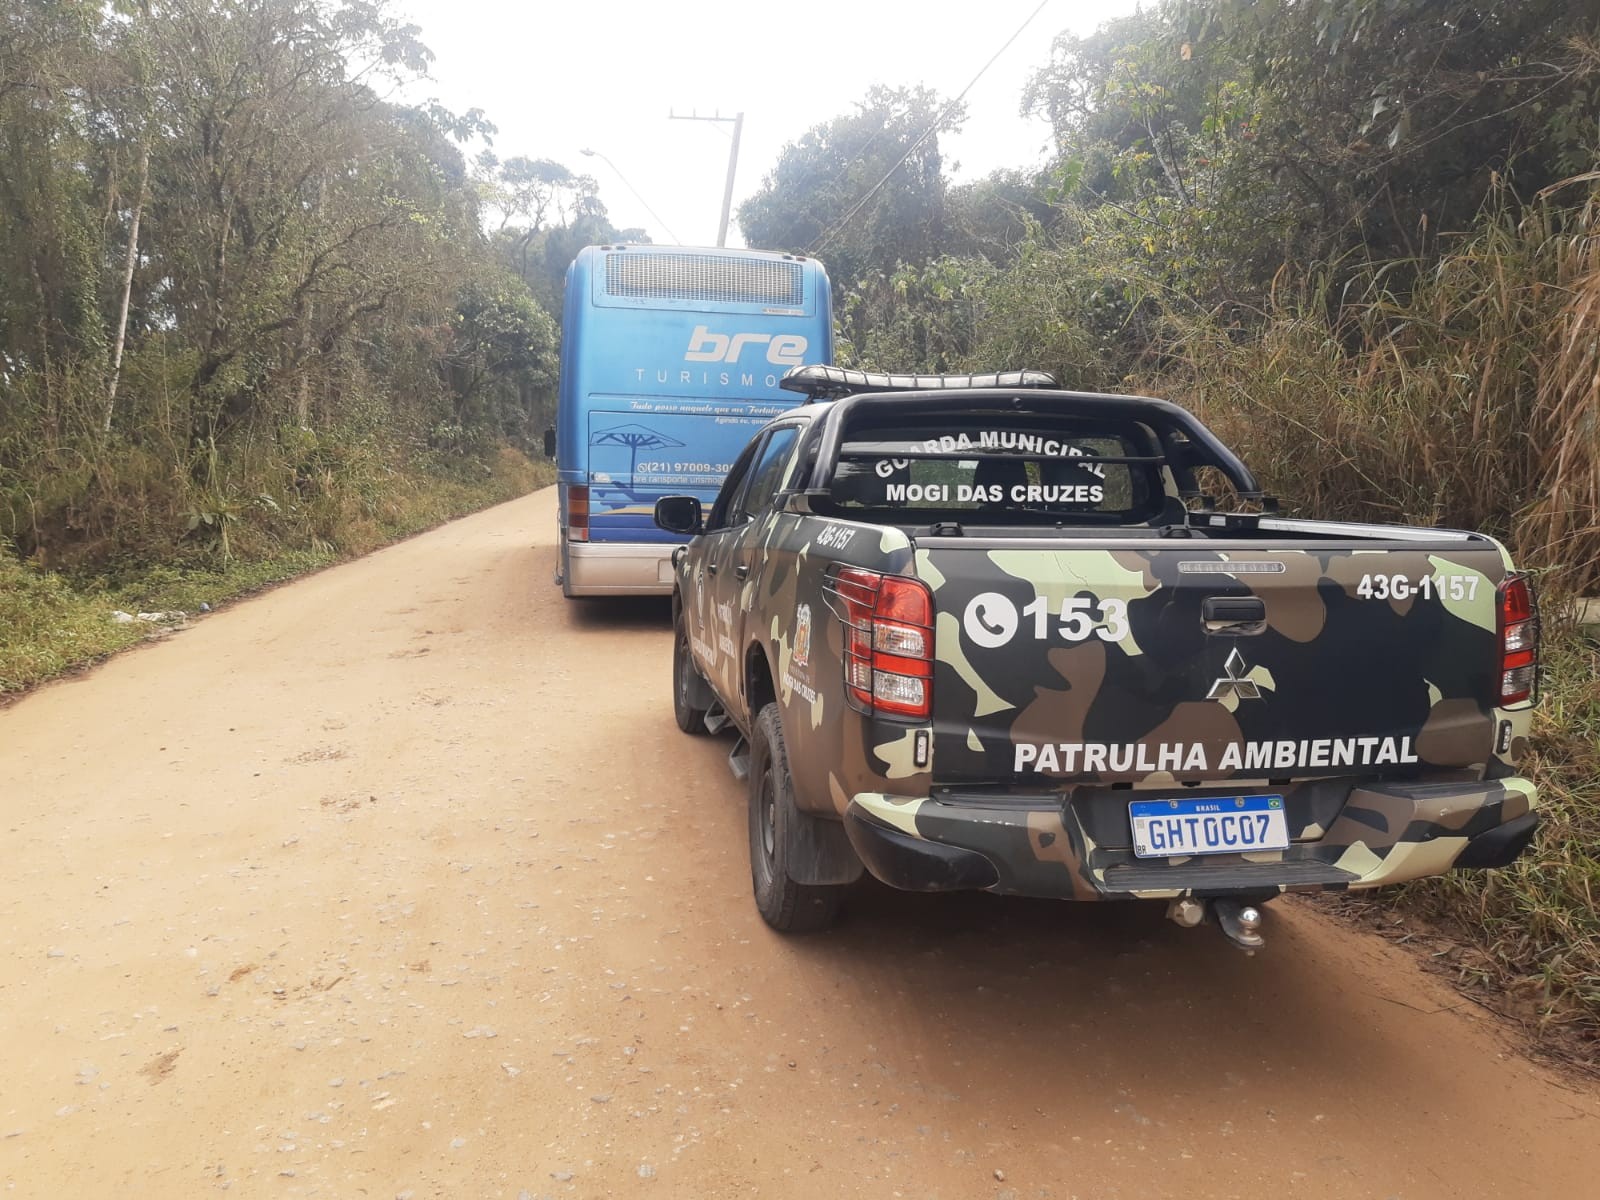 Patrulha Ambiental de Mogi recupera ônibus de turismo furtado em Itaquaquecetuba